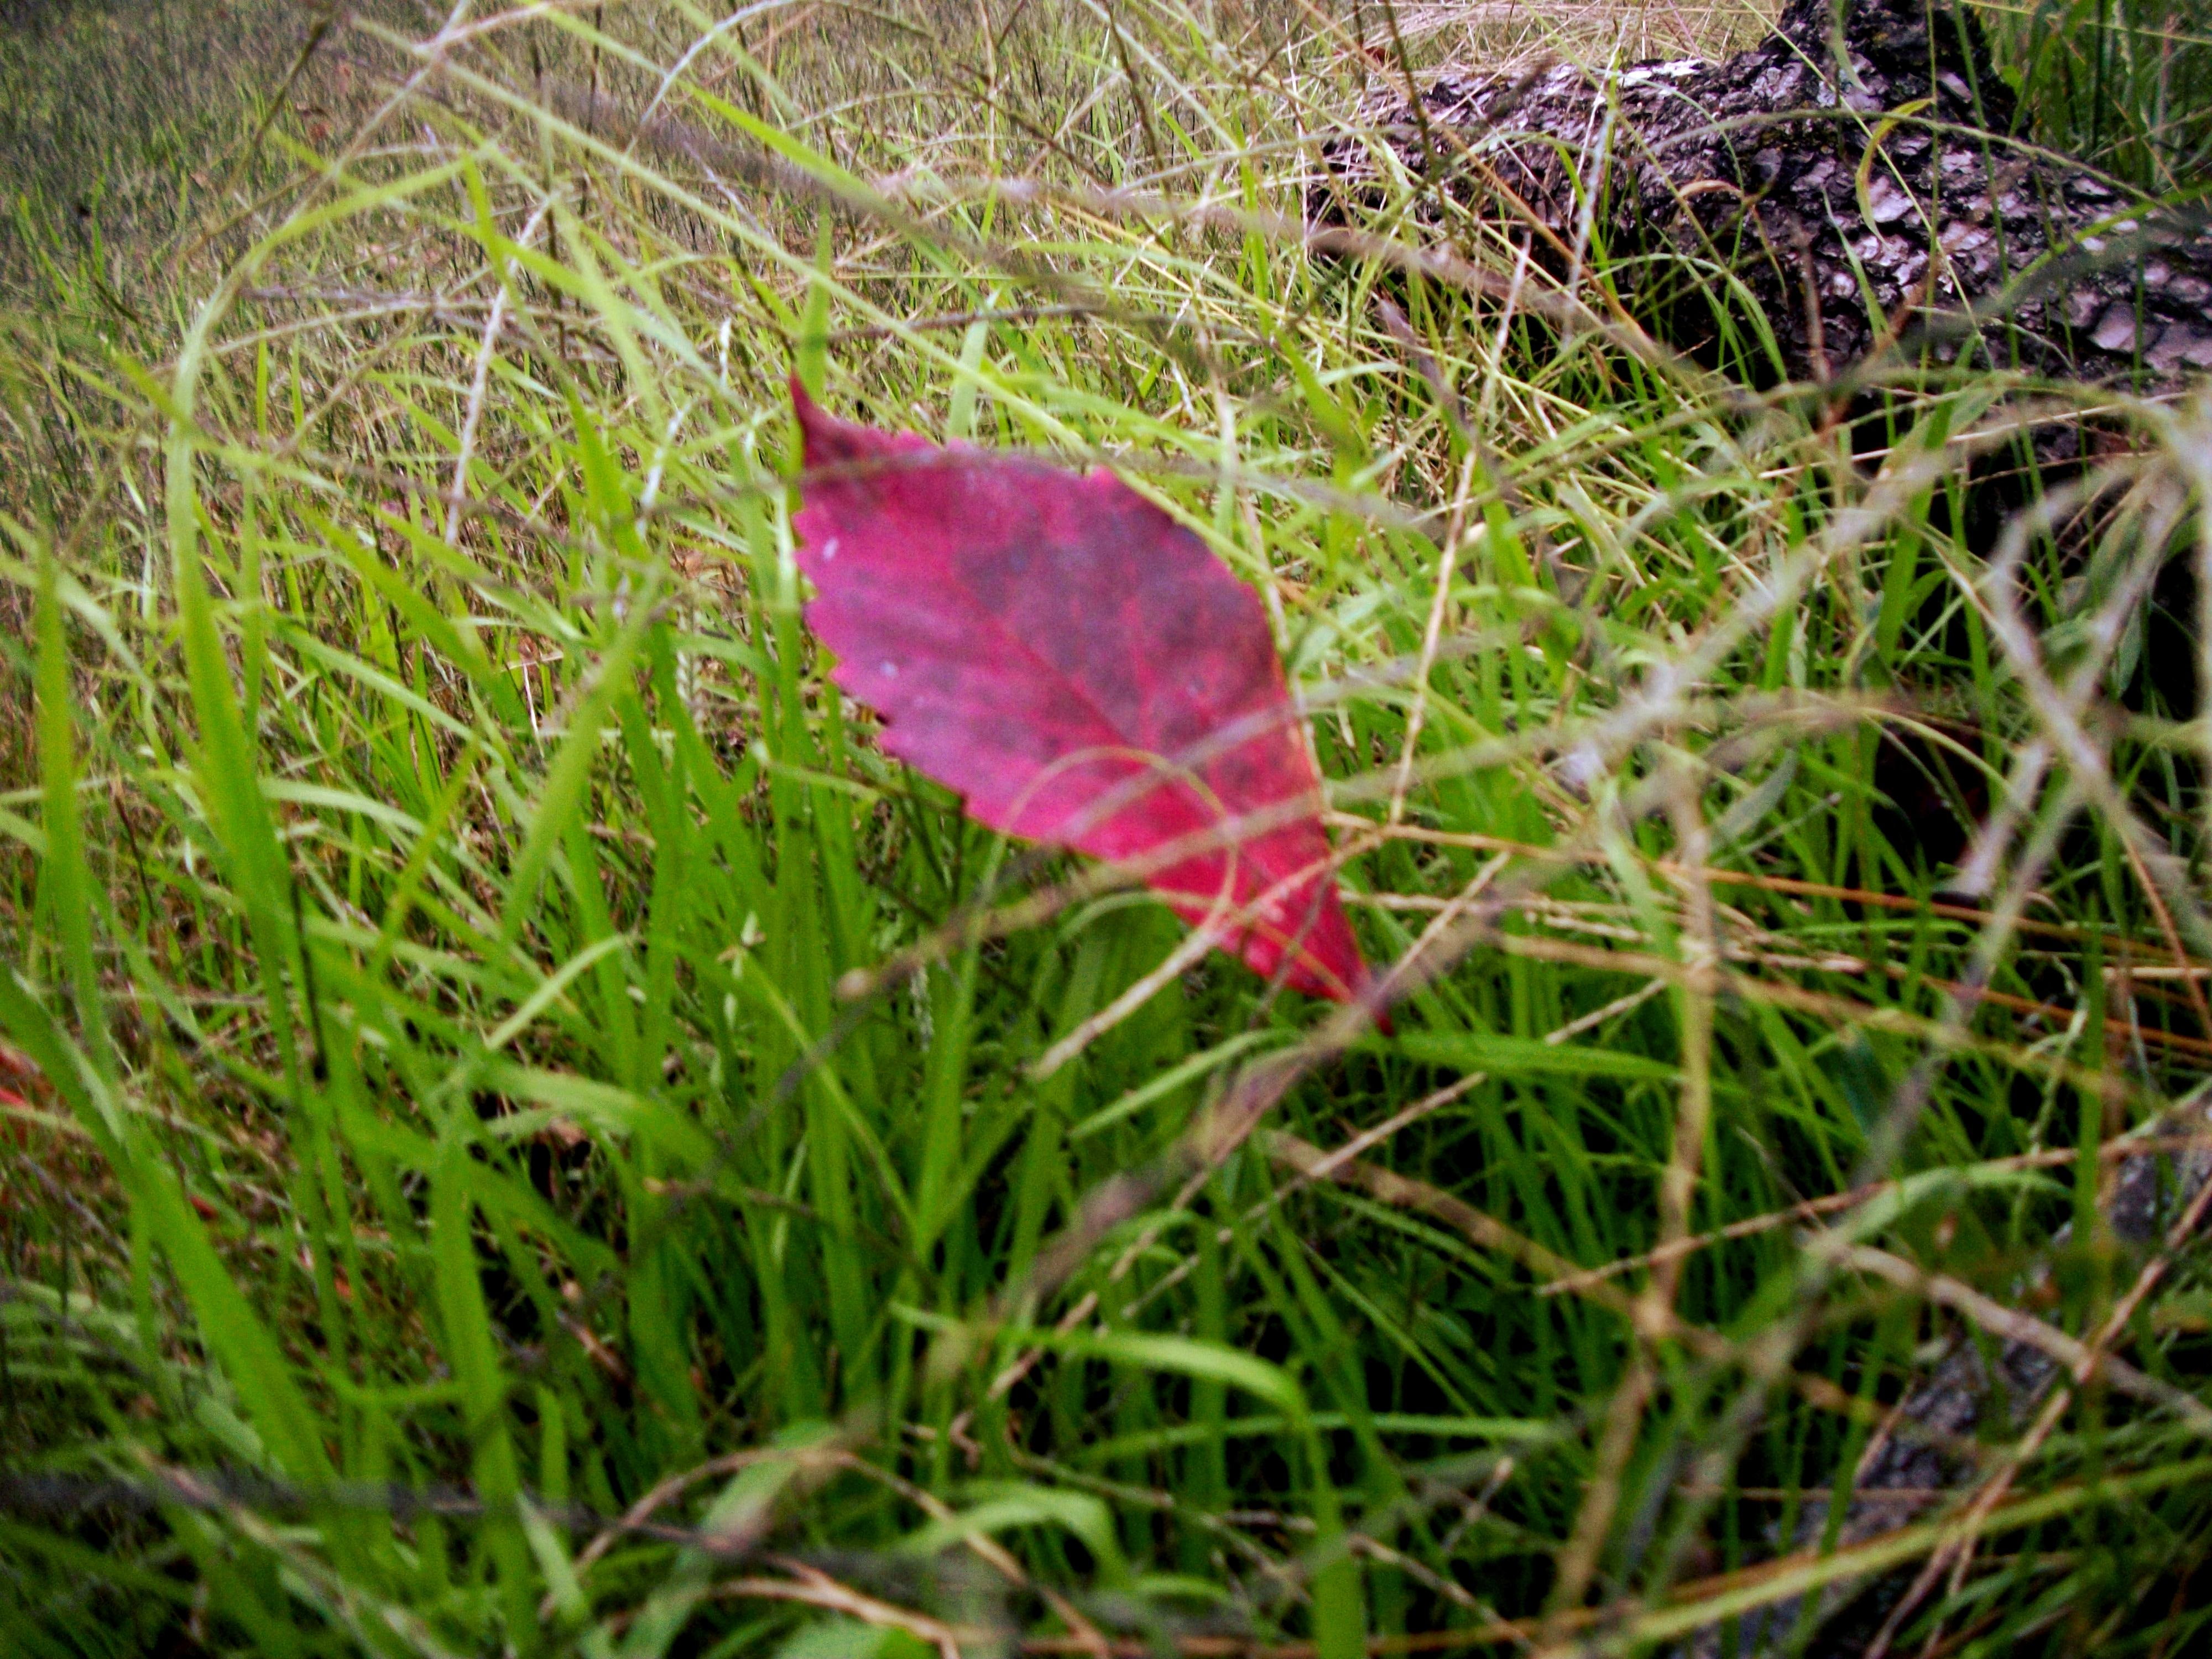 Red lil, brown leaf and green grass, jake, leavs, logs-in-uper-left-corner